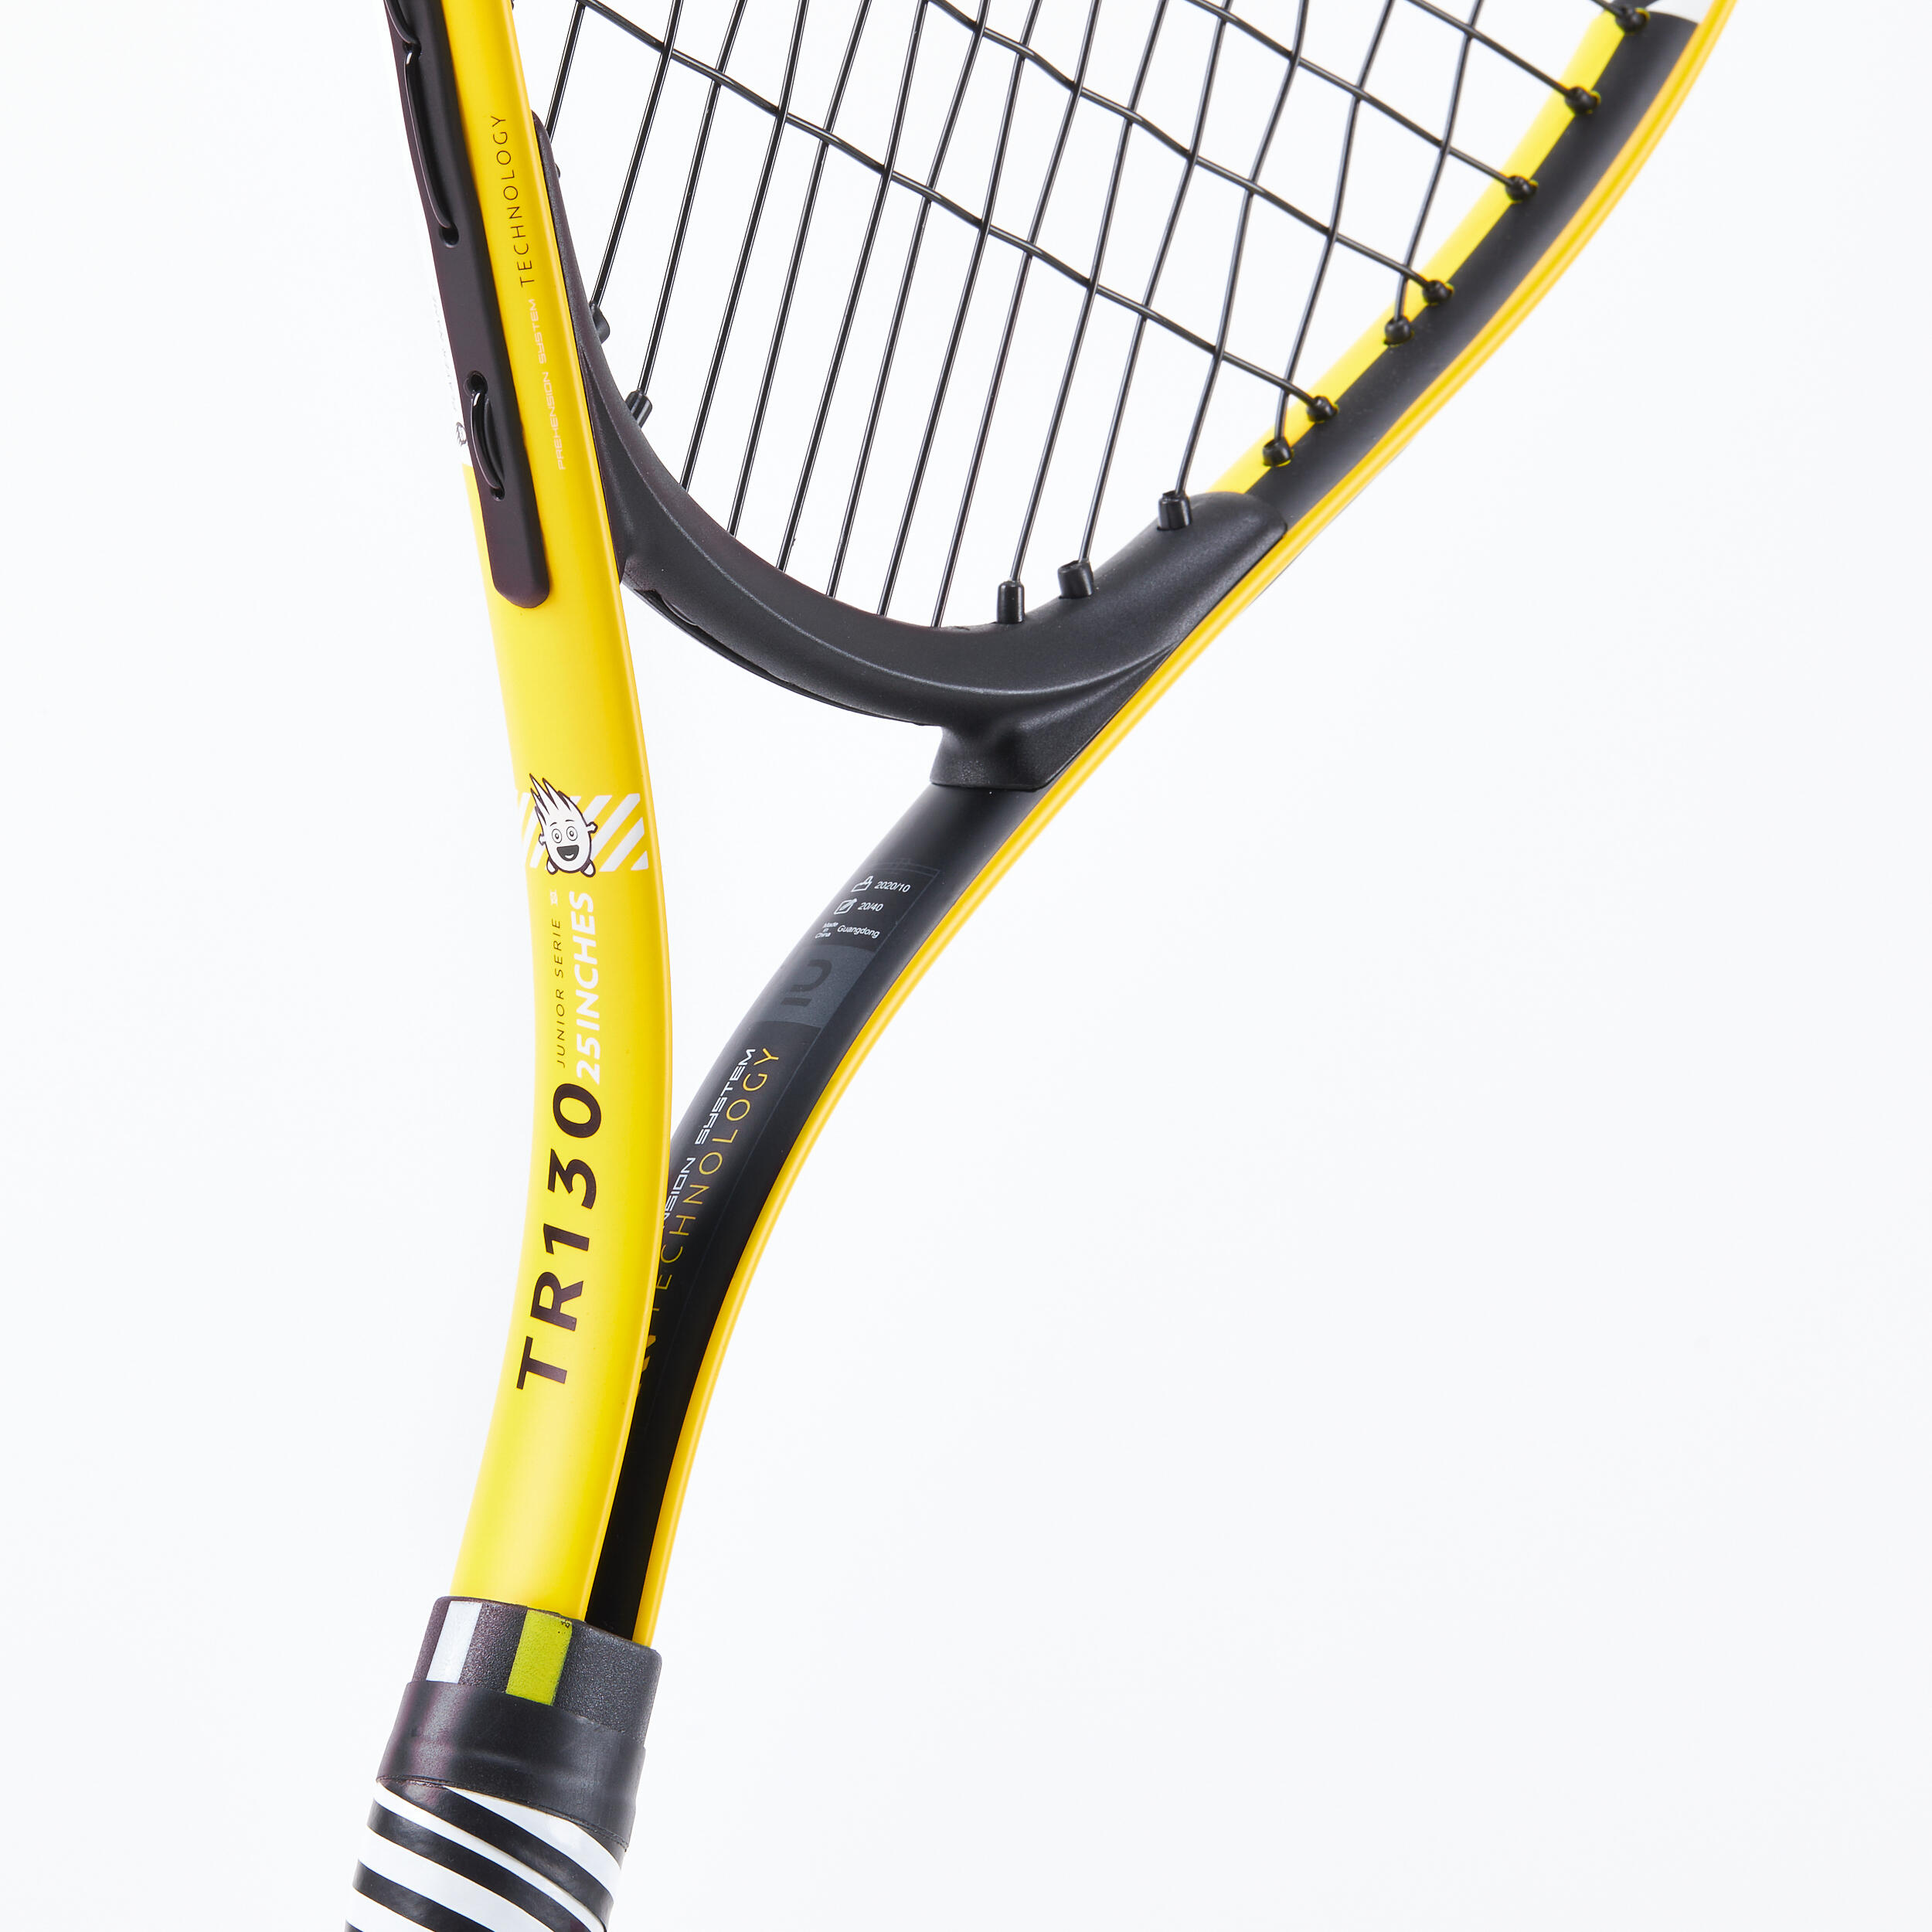 Raquette de tennis enfants – TR 130 jaune - ARTENGO